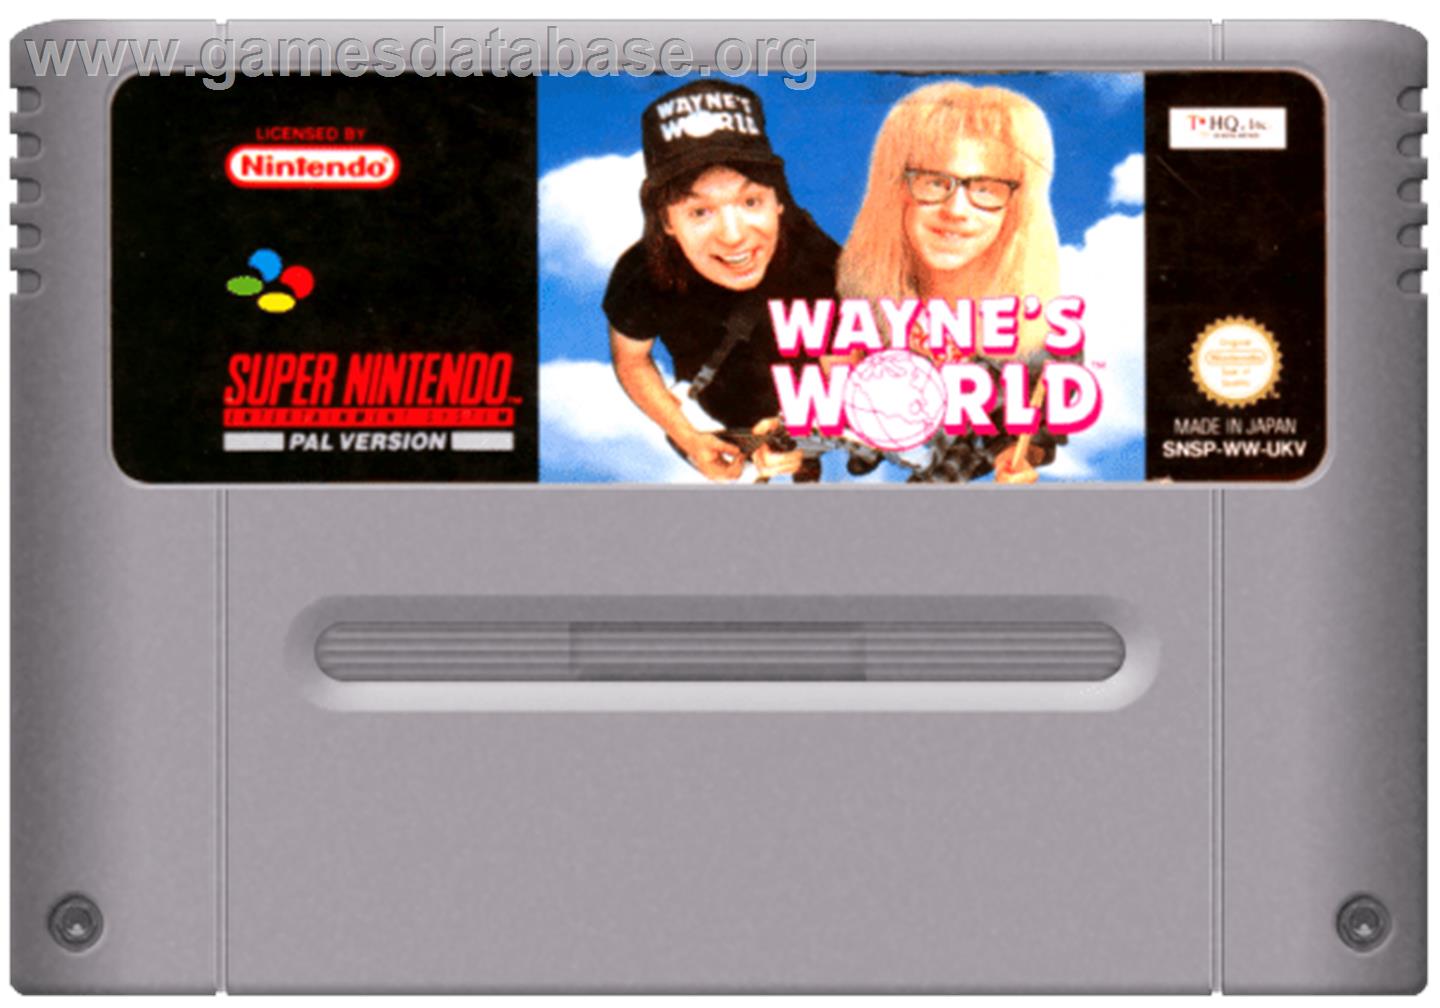 Wayne's World - Nintendo SNES - Artwork - Cartridge